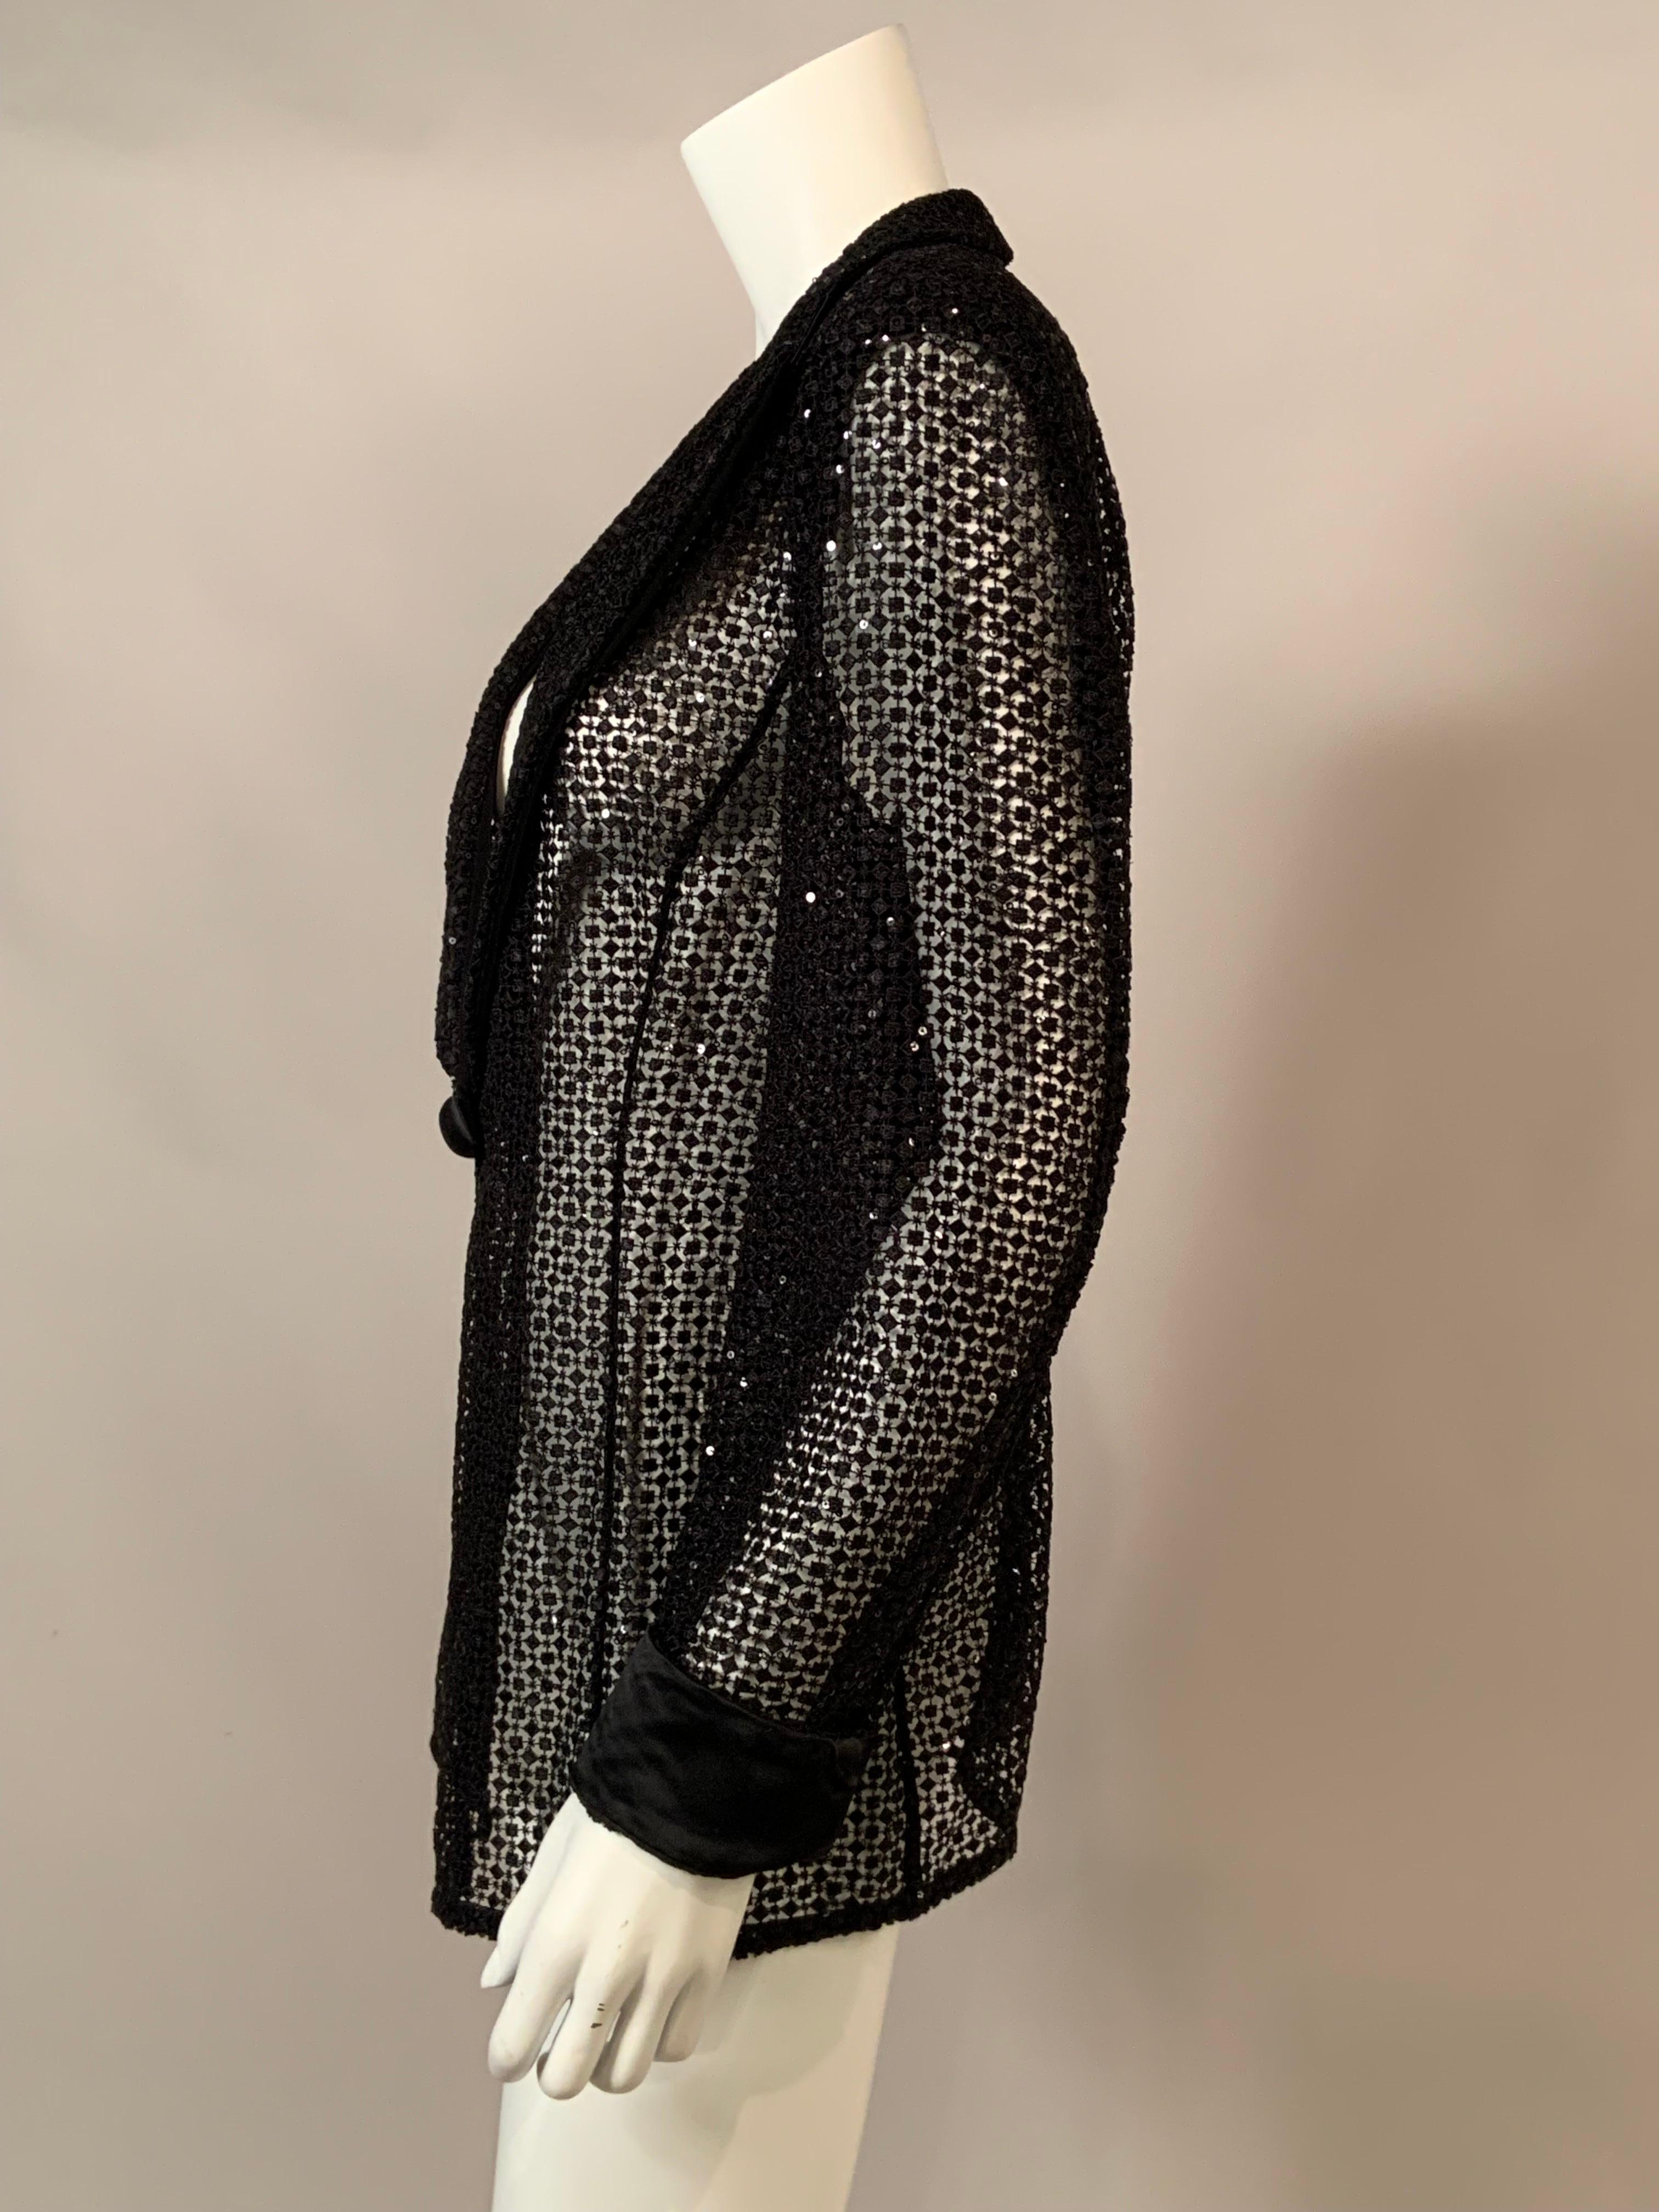 Armani Black Satin Trimmed Open Work Jacket with Sequins Larger Size 3